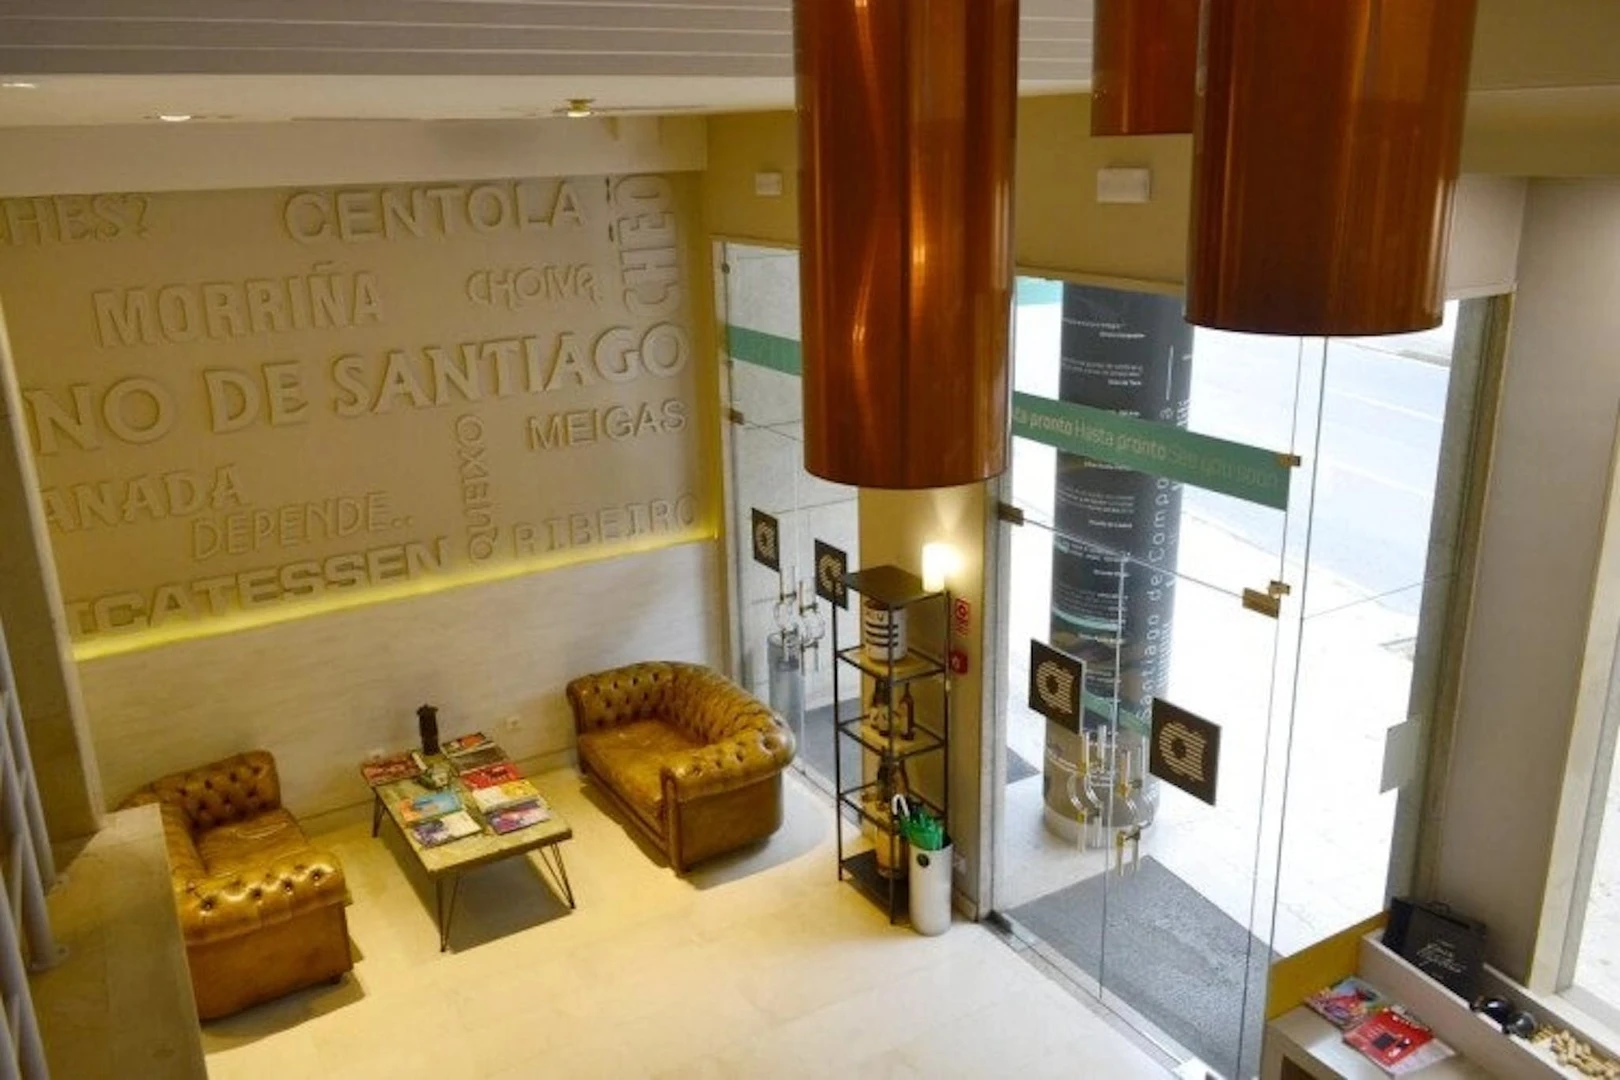 Santiago De Compostela de modern ve aydınlık daire